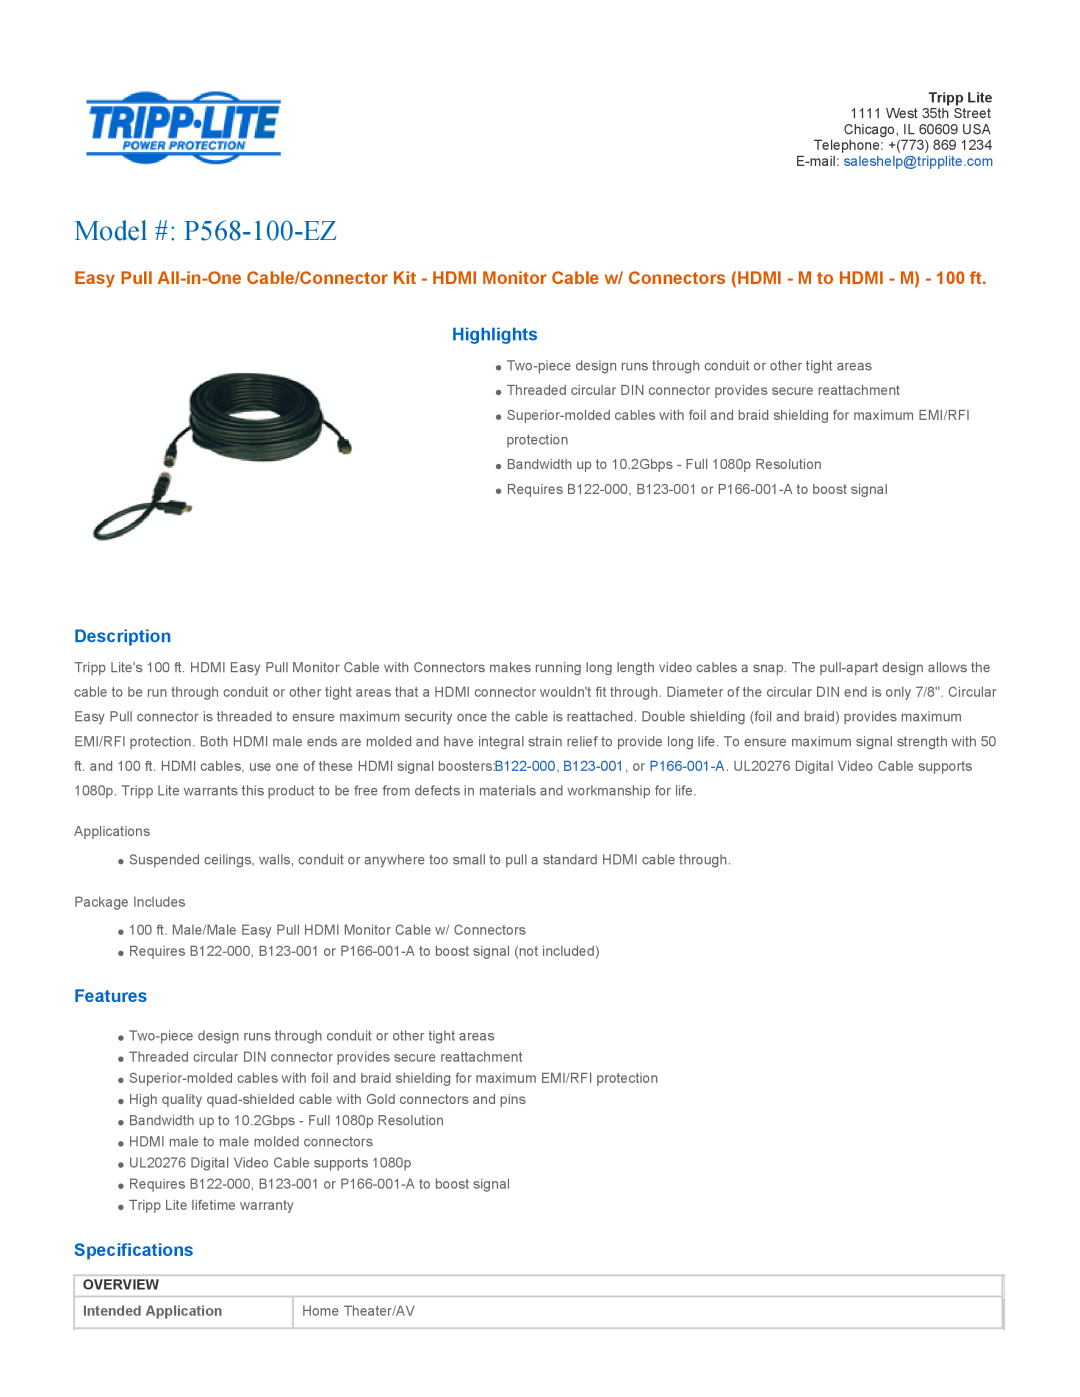 Tripp Lite UL20276 specifications Highlights, Description, Features, Specifications, Overview, Model # P568-100-EZ 